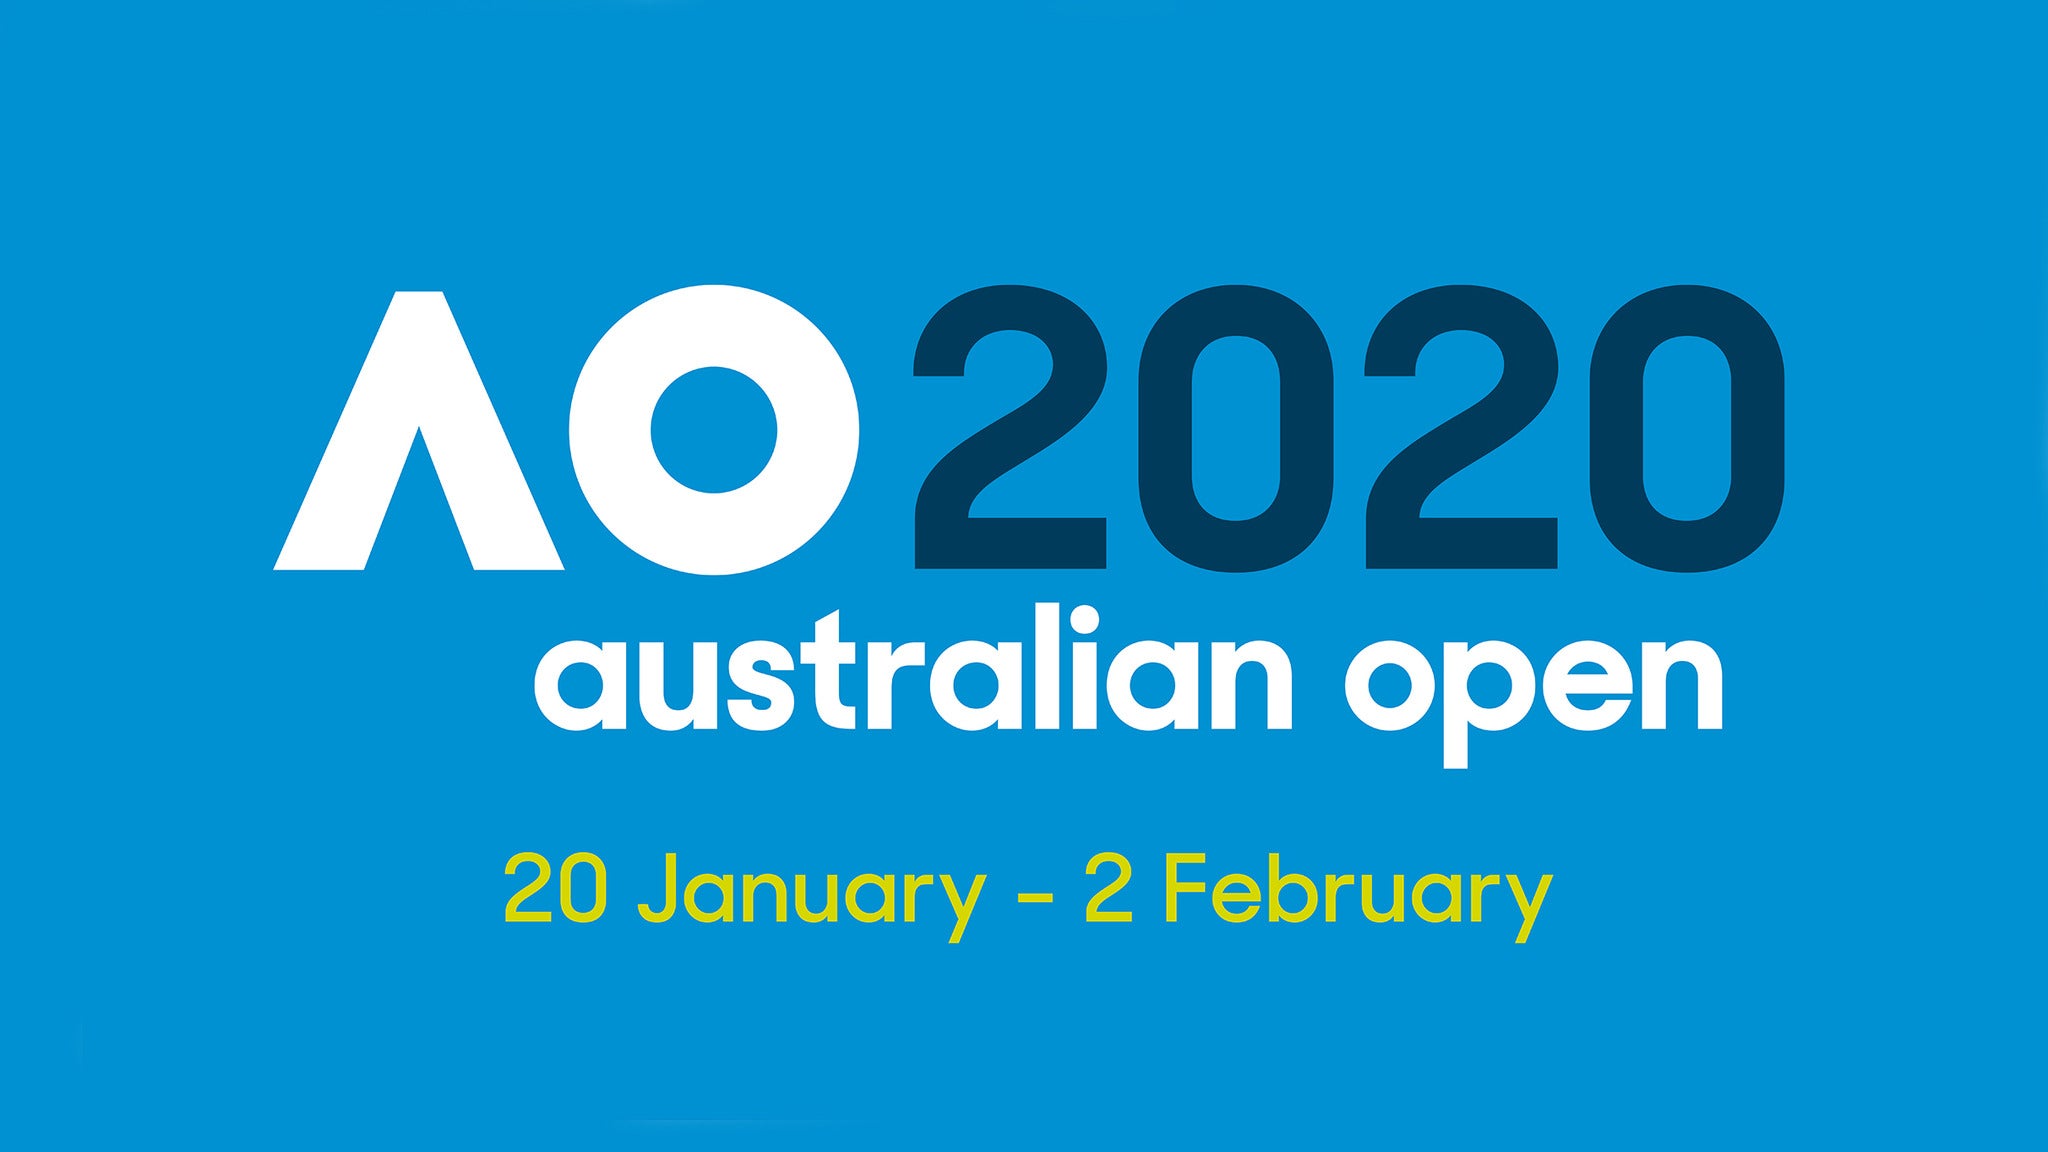 Australian Open 2020 - Melbourne Arena - Single Session (Day)